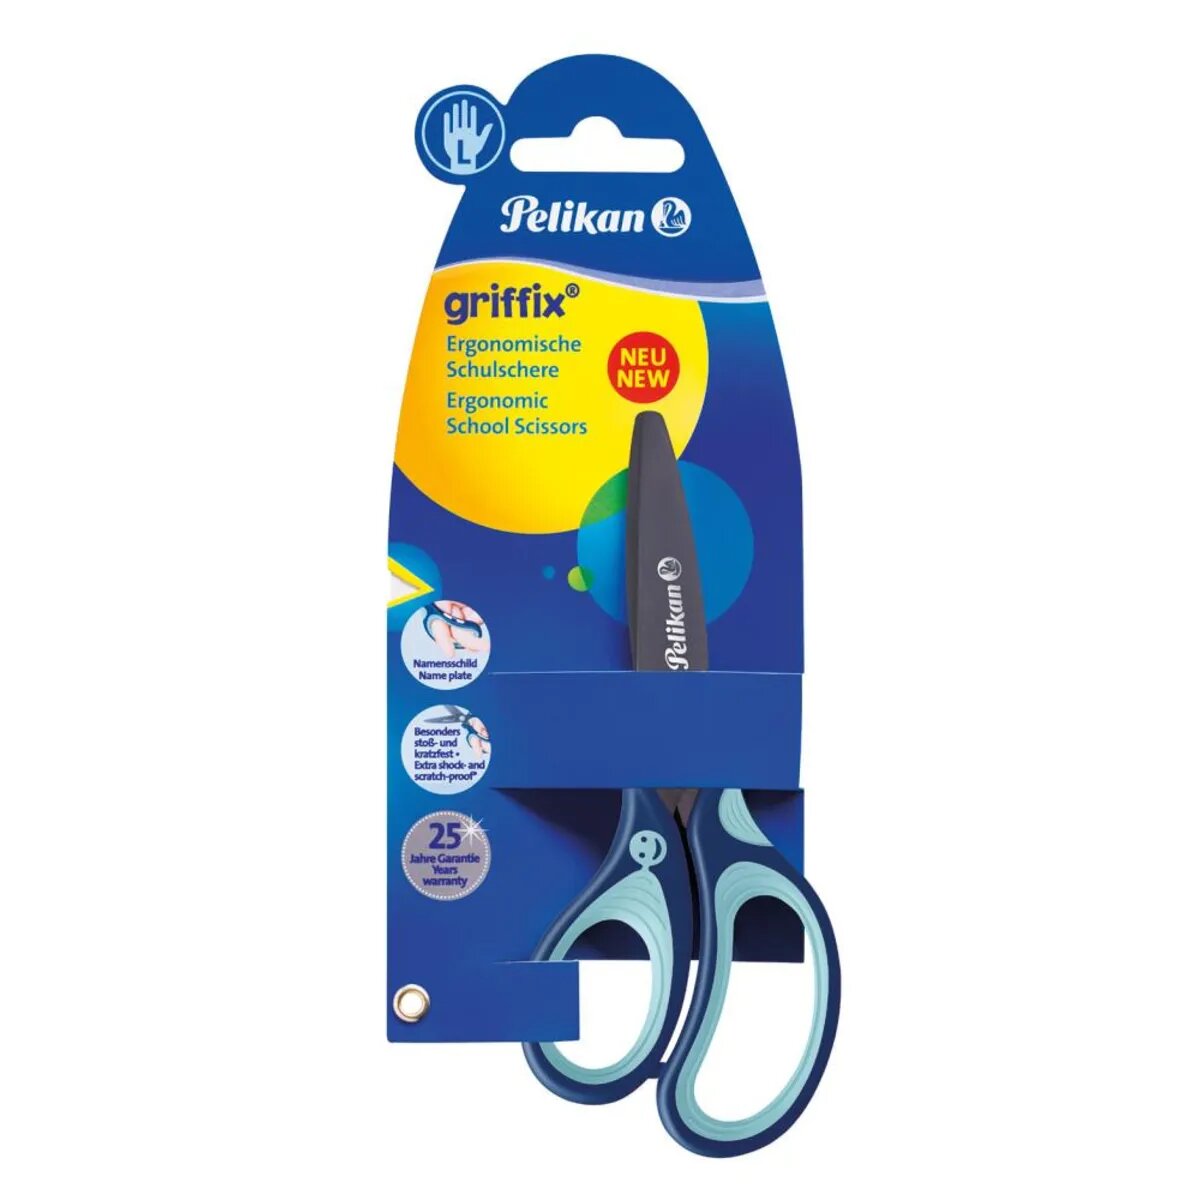 Pelikan griffix® Ergonomische Schulschere, blau, 14 cm, links, Blisterkarte